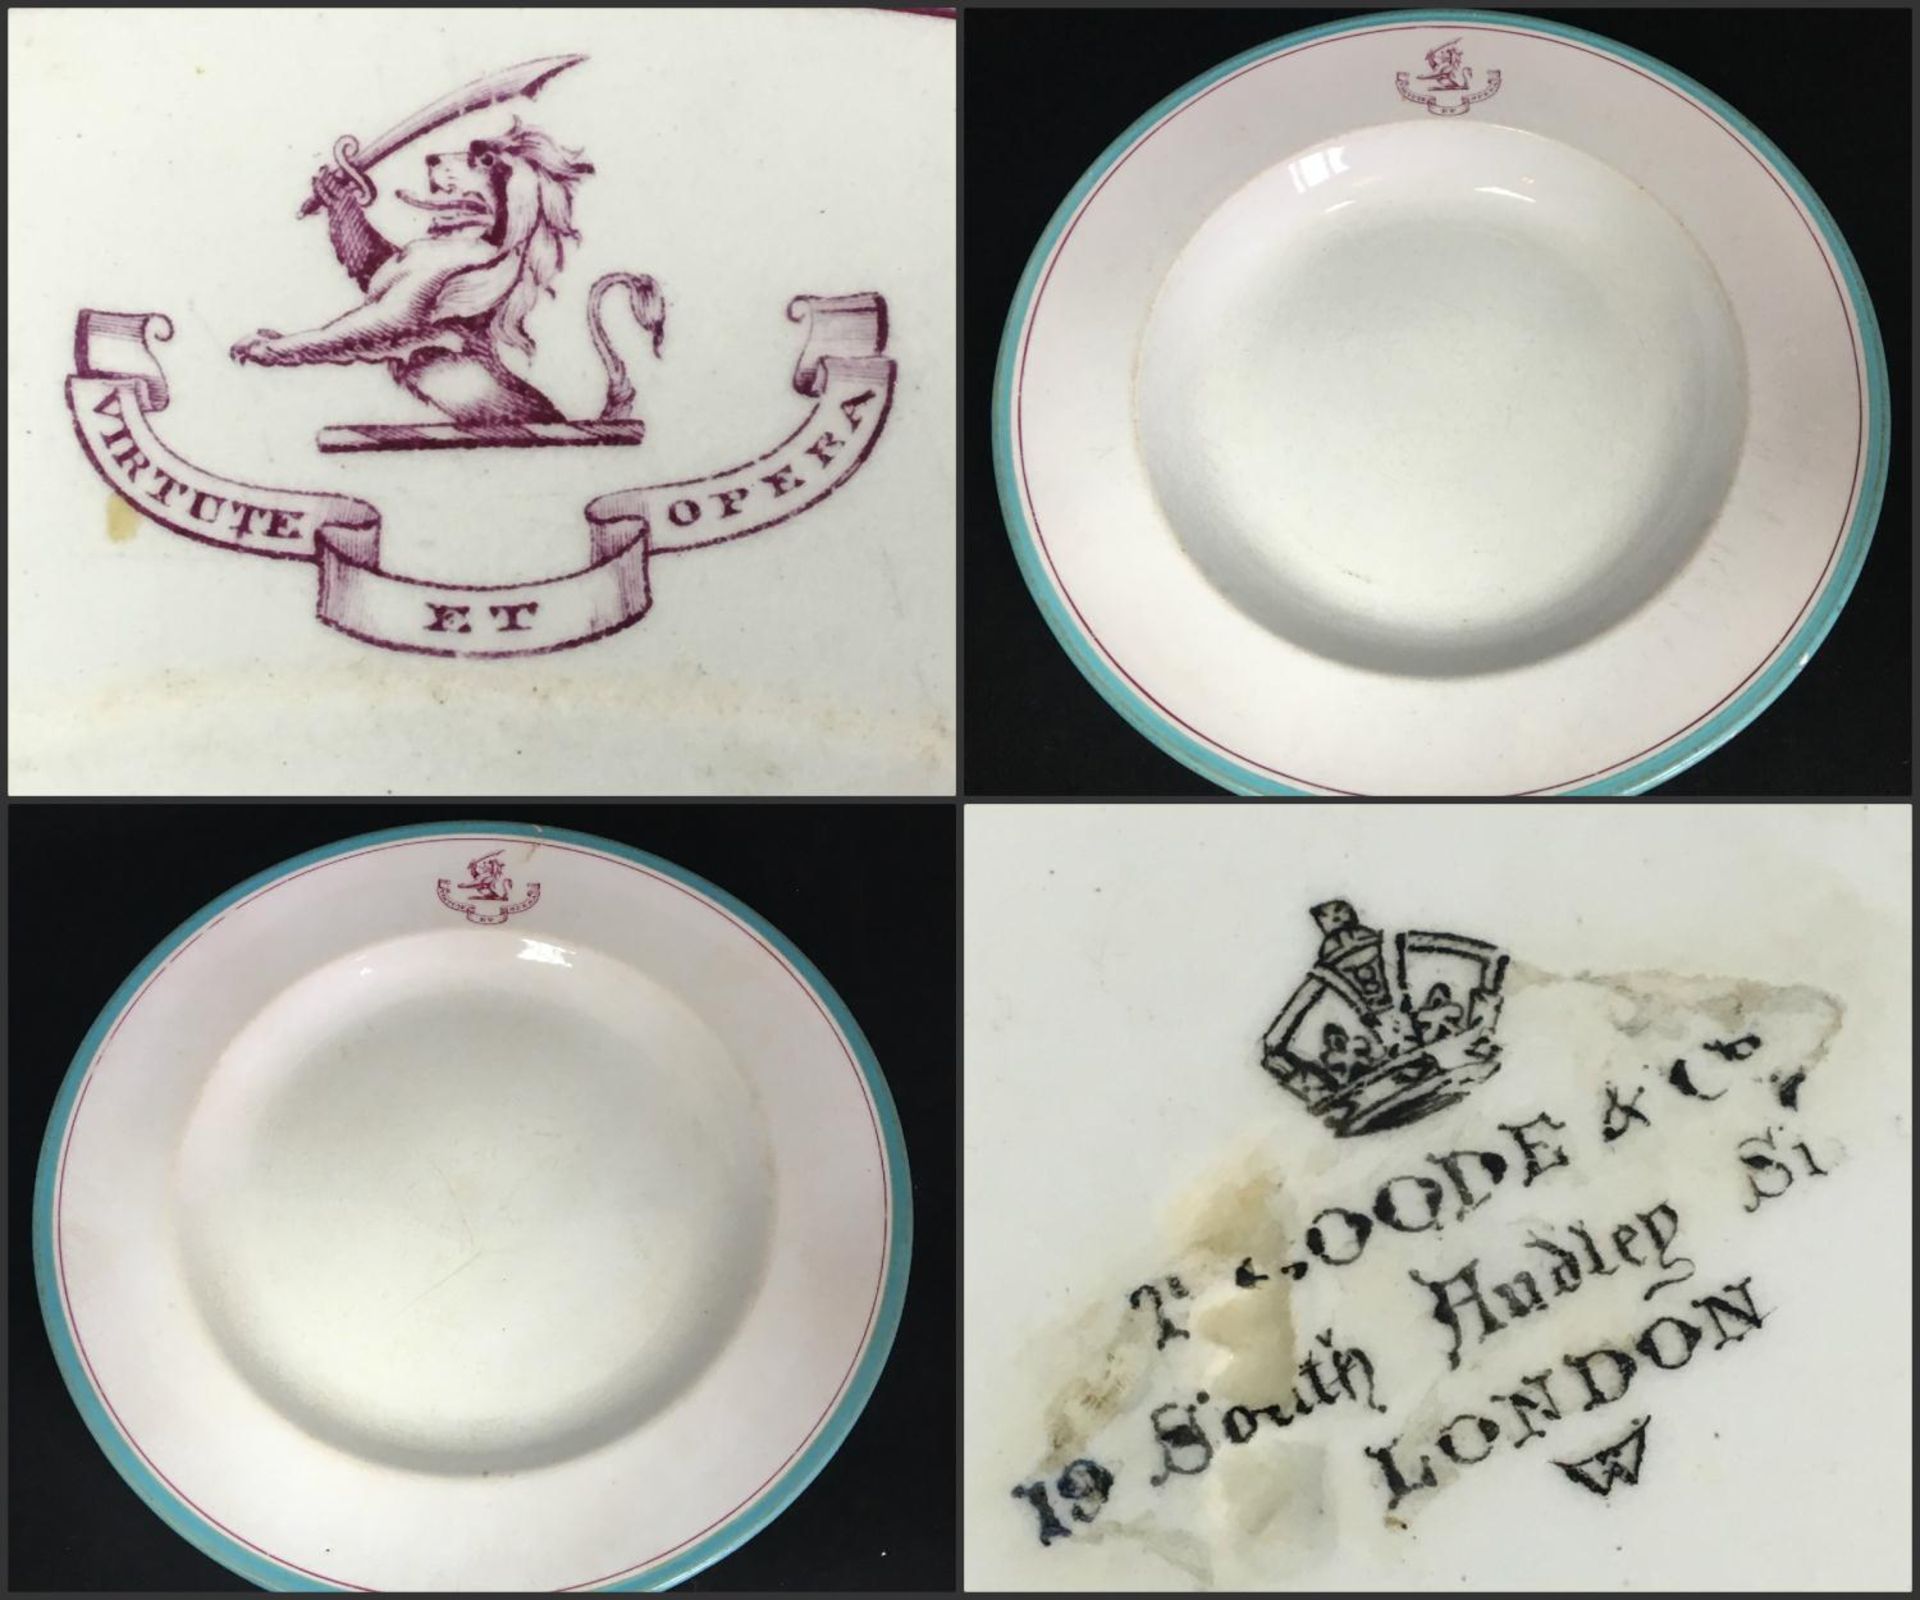 19th century heraldic plate and bowl "vertute et opera" the motto of the Duke of Fife. c1880.